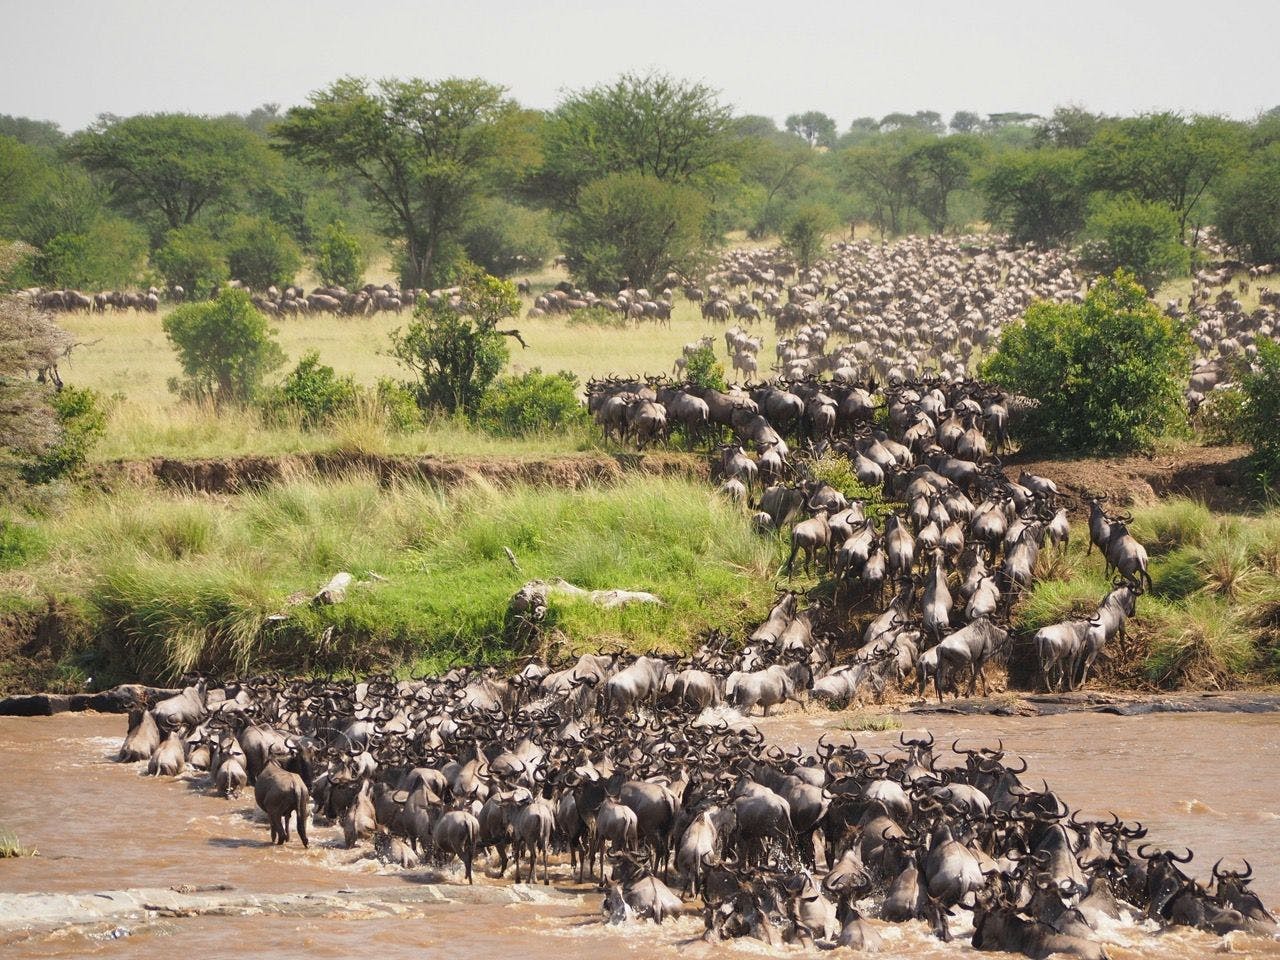 Wildebeest migration in Serengeti national park in Tanzania